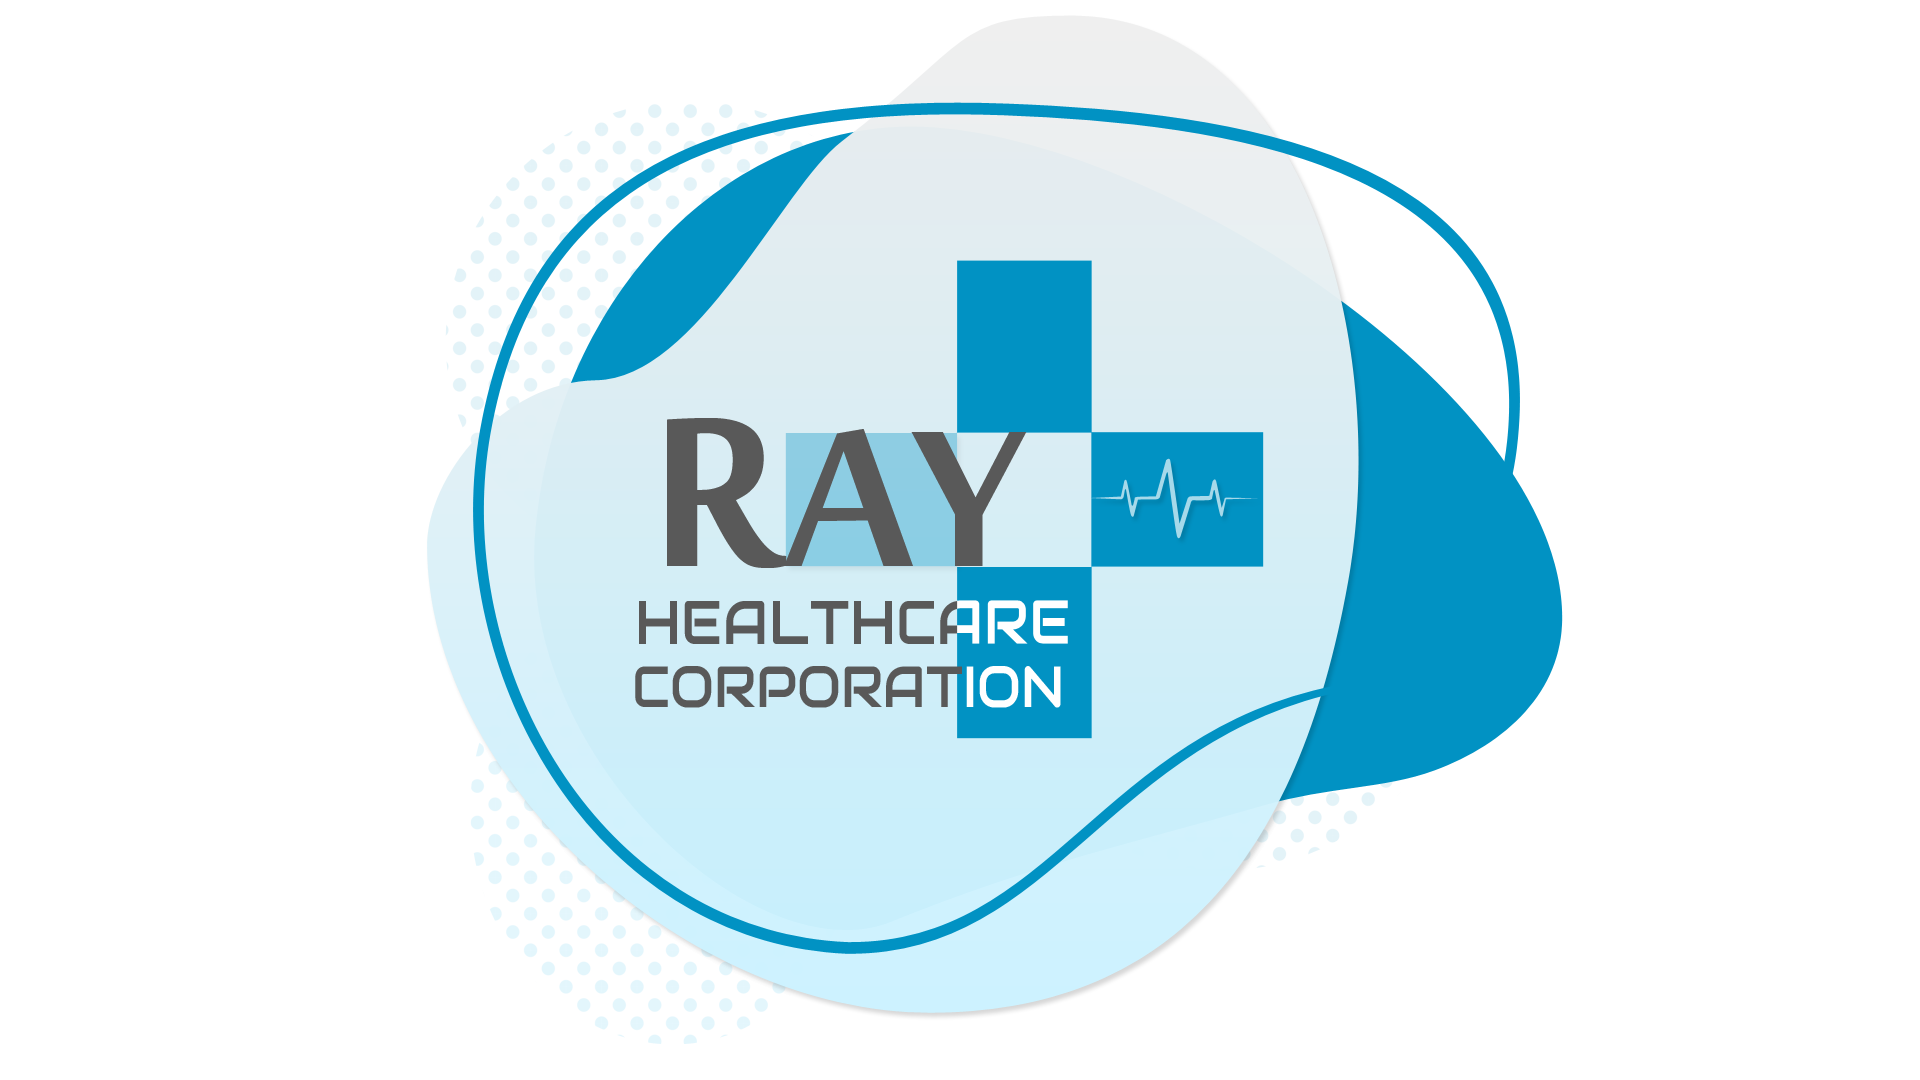 Ray Healthcare Corporation